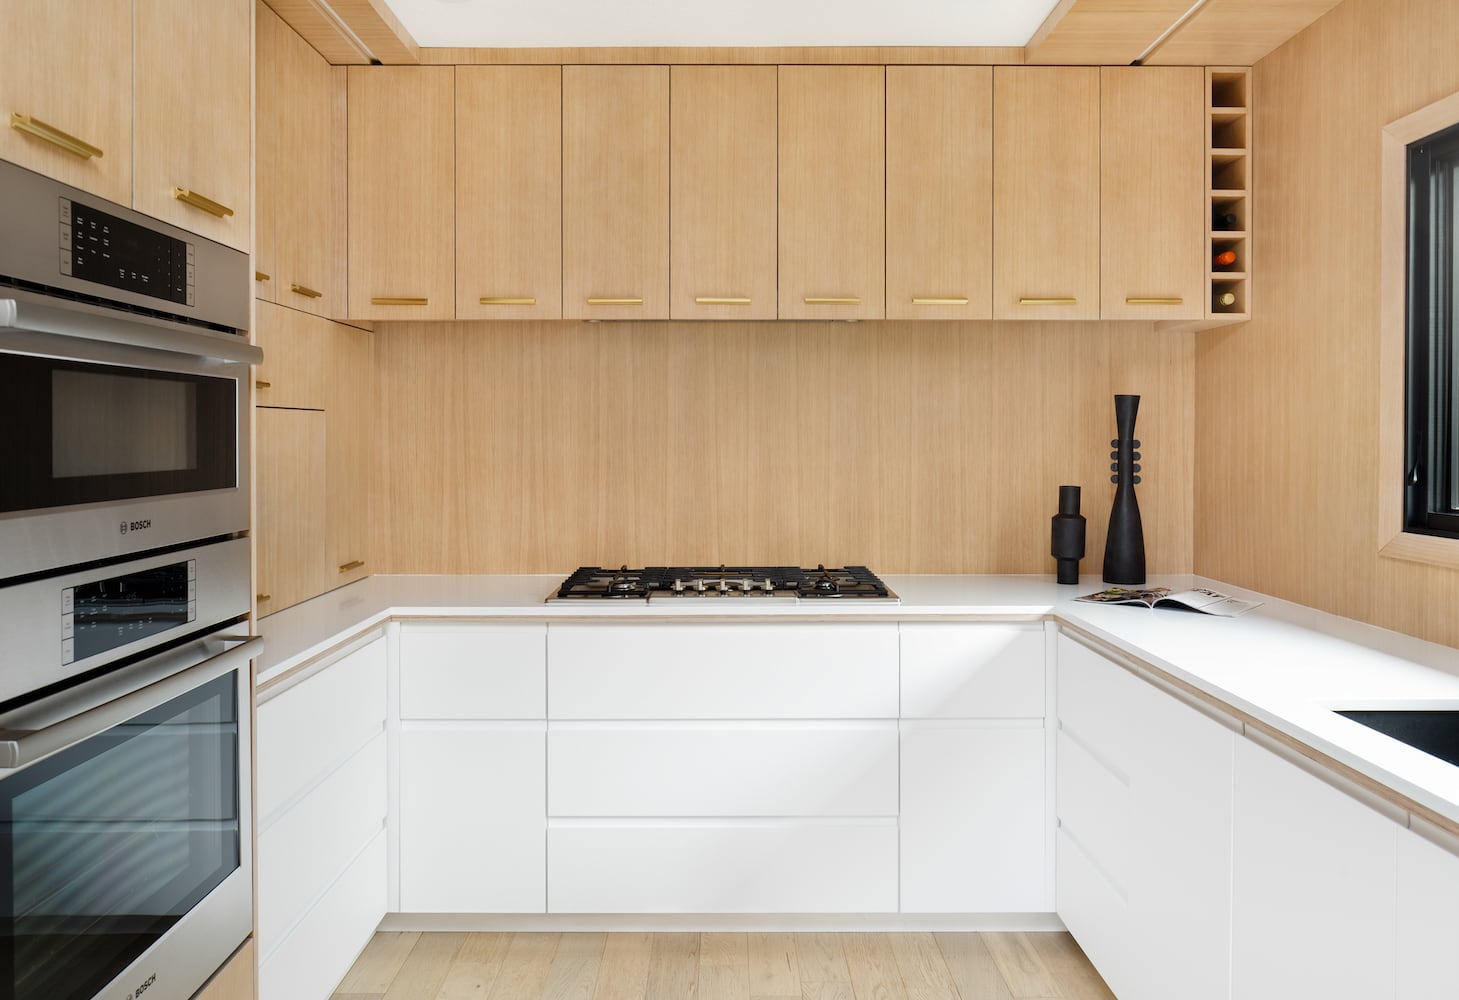 Modern light wood kitchen with white cabinets and wood backsplash